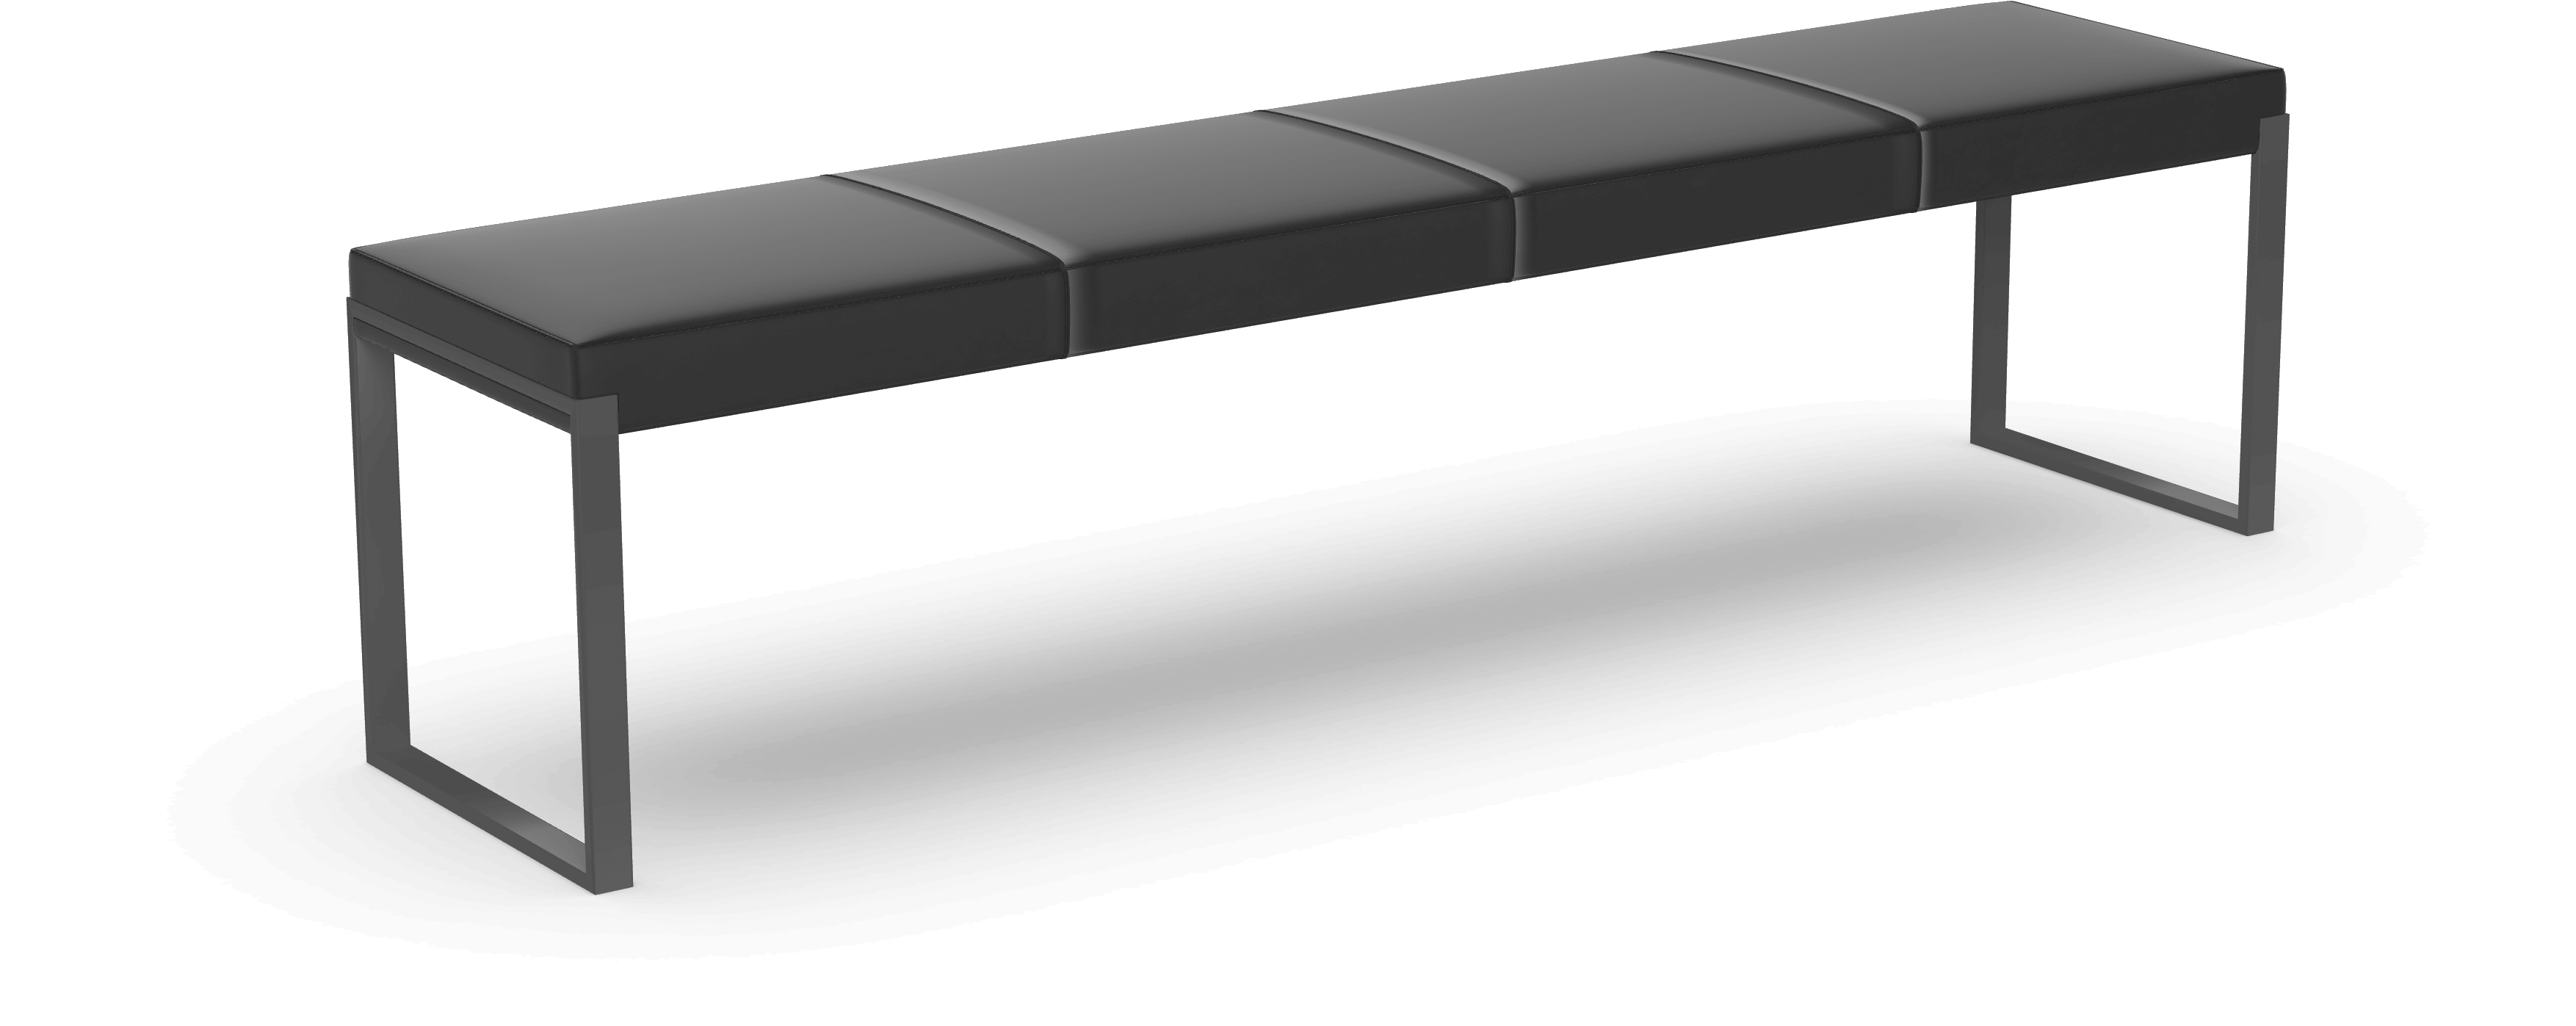 fusion bench angled black